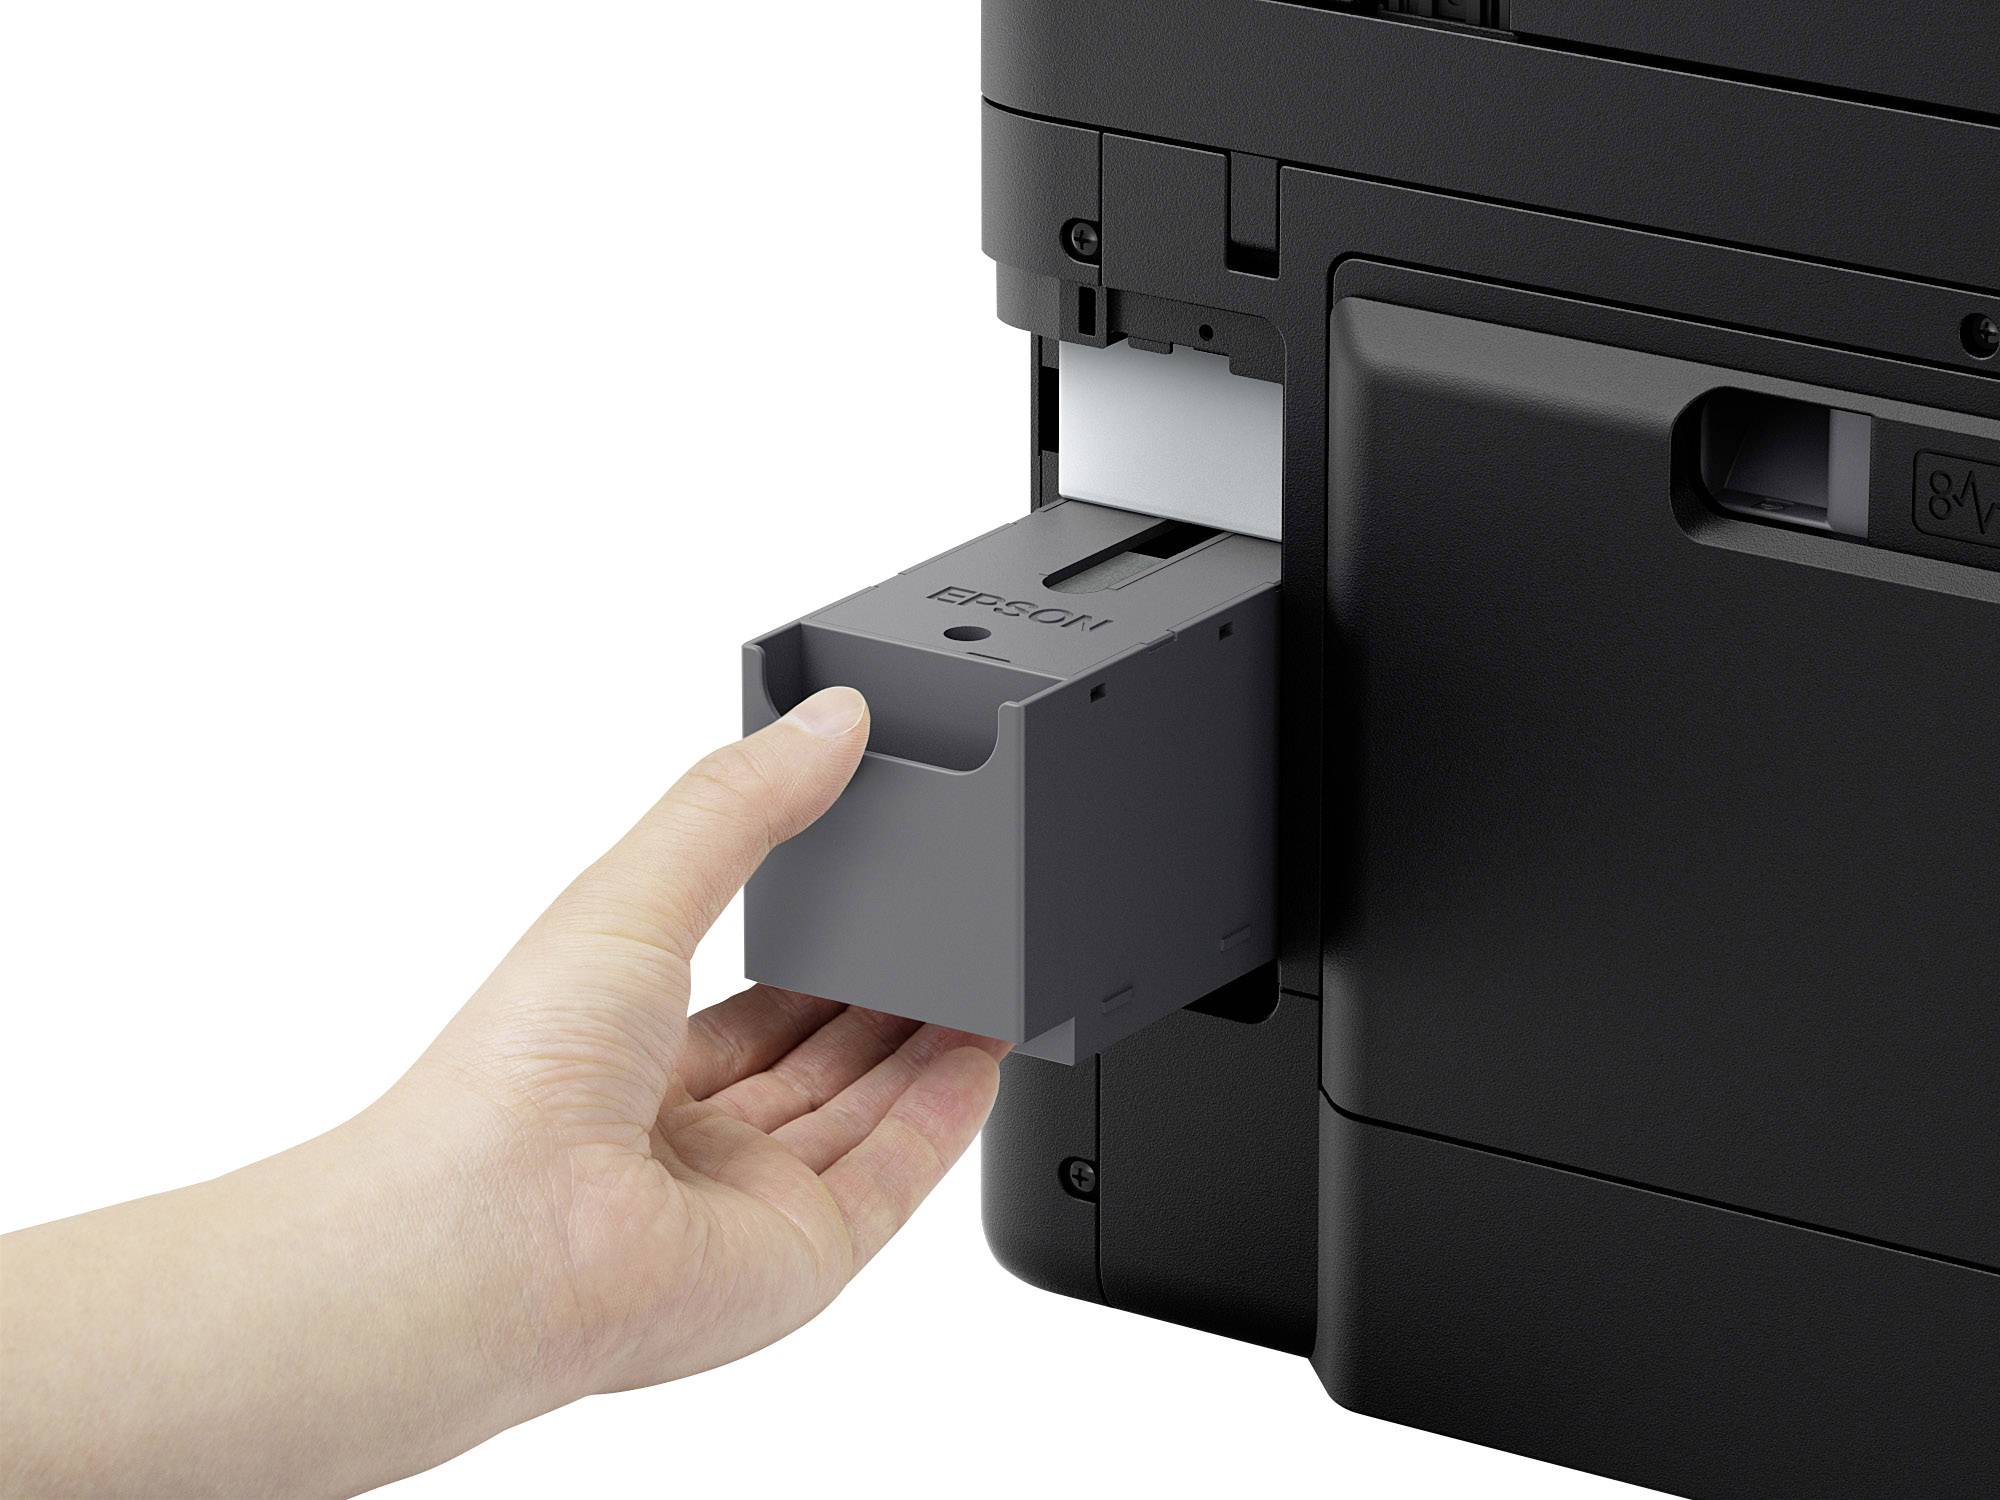 Epson Workforce Pro Wf 4740dtwf Colour Inkjet Multifunction Printer A4 Printer Scanner Copier 0783